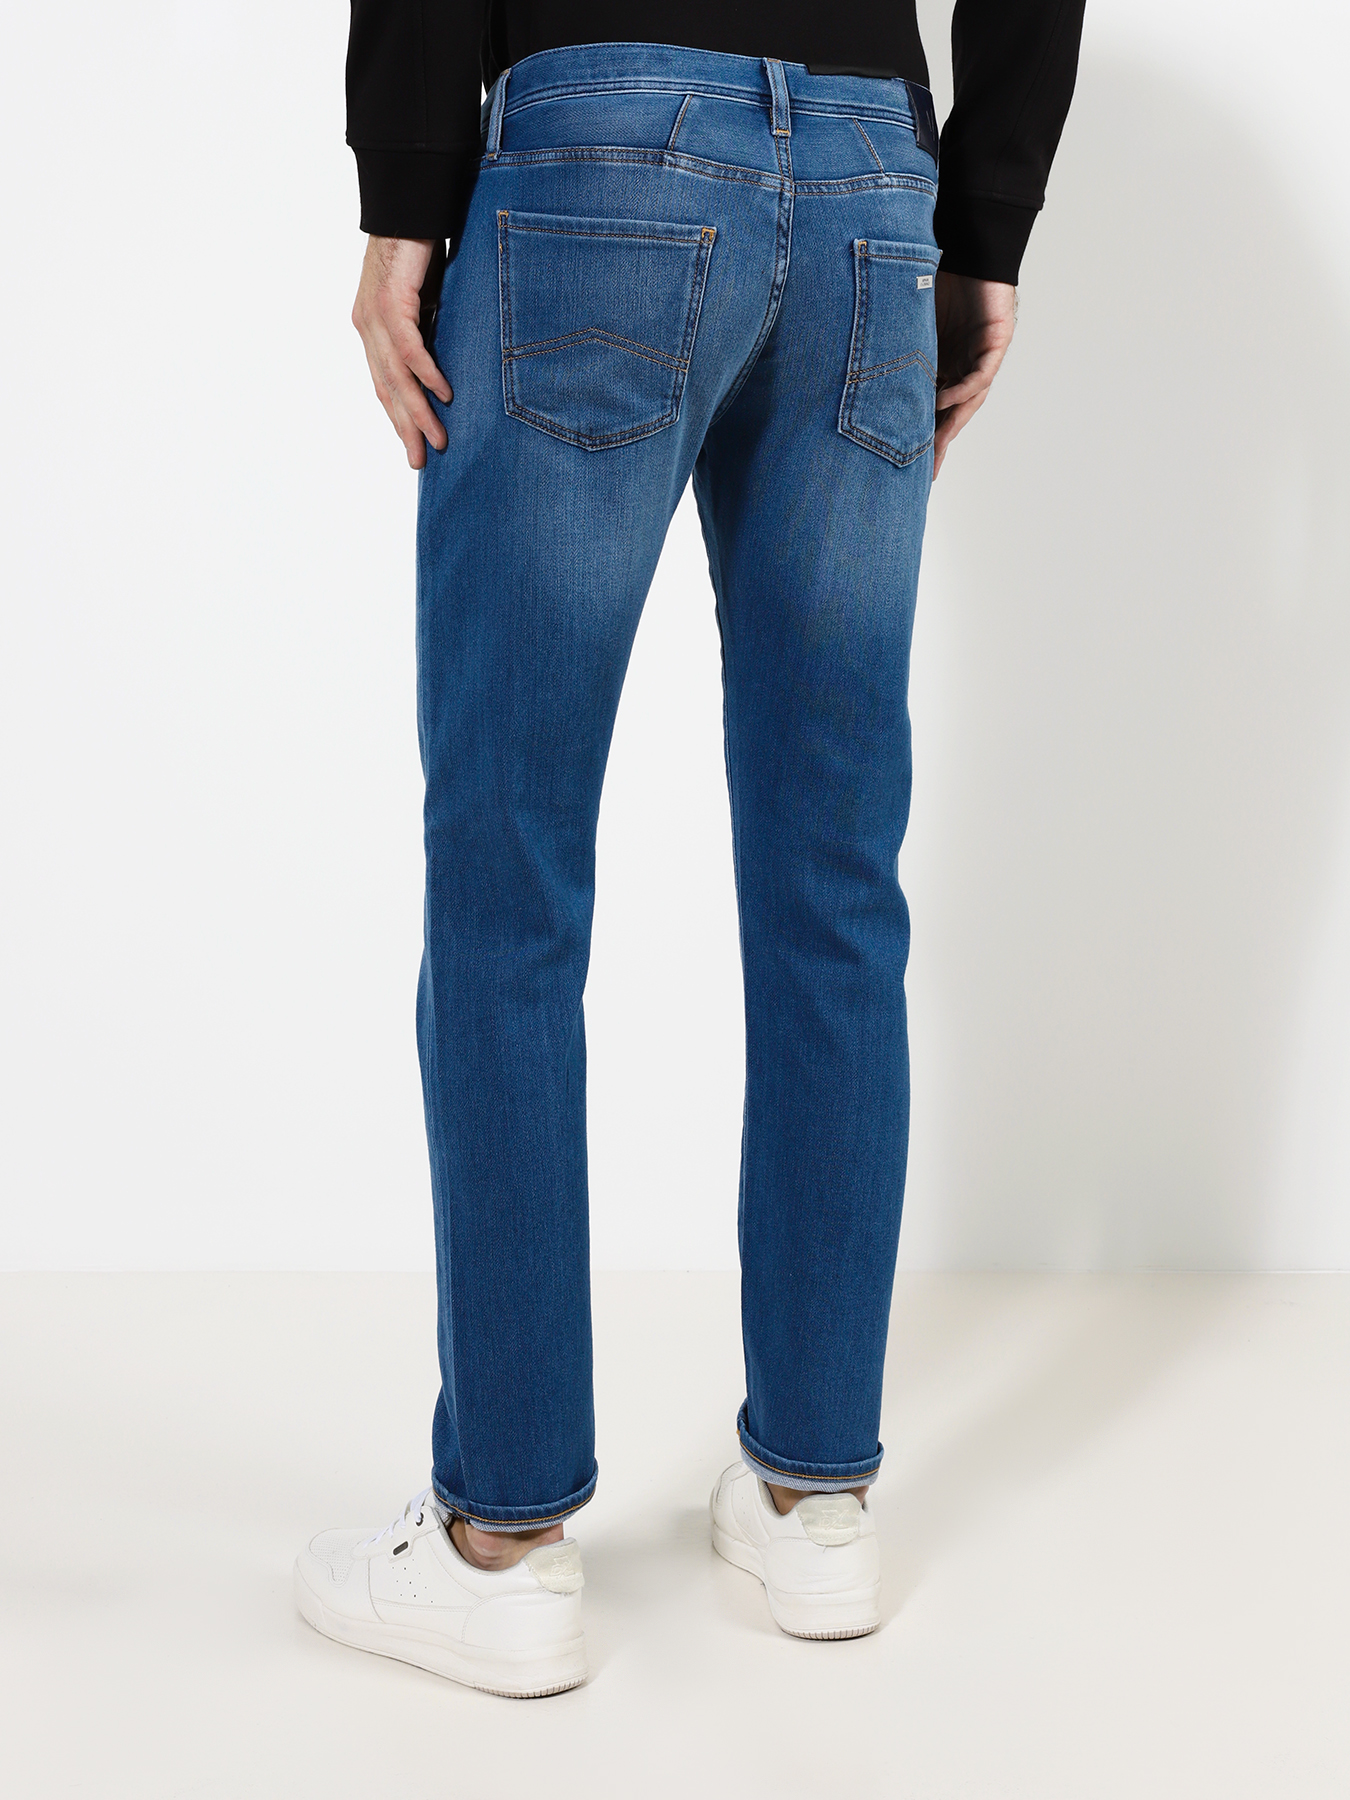 Armani Exchange Мужские джинсы J13 363996-012 Фото 2